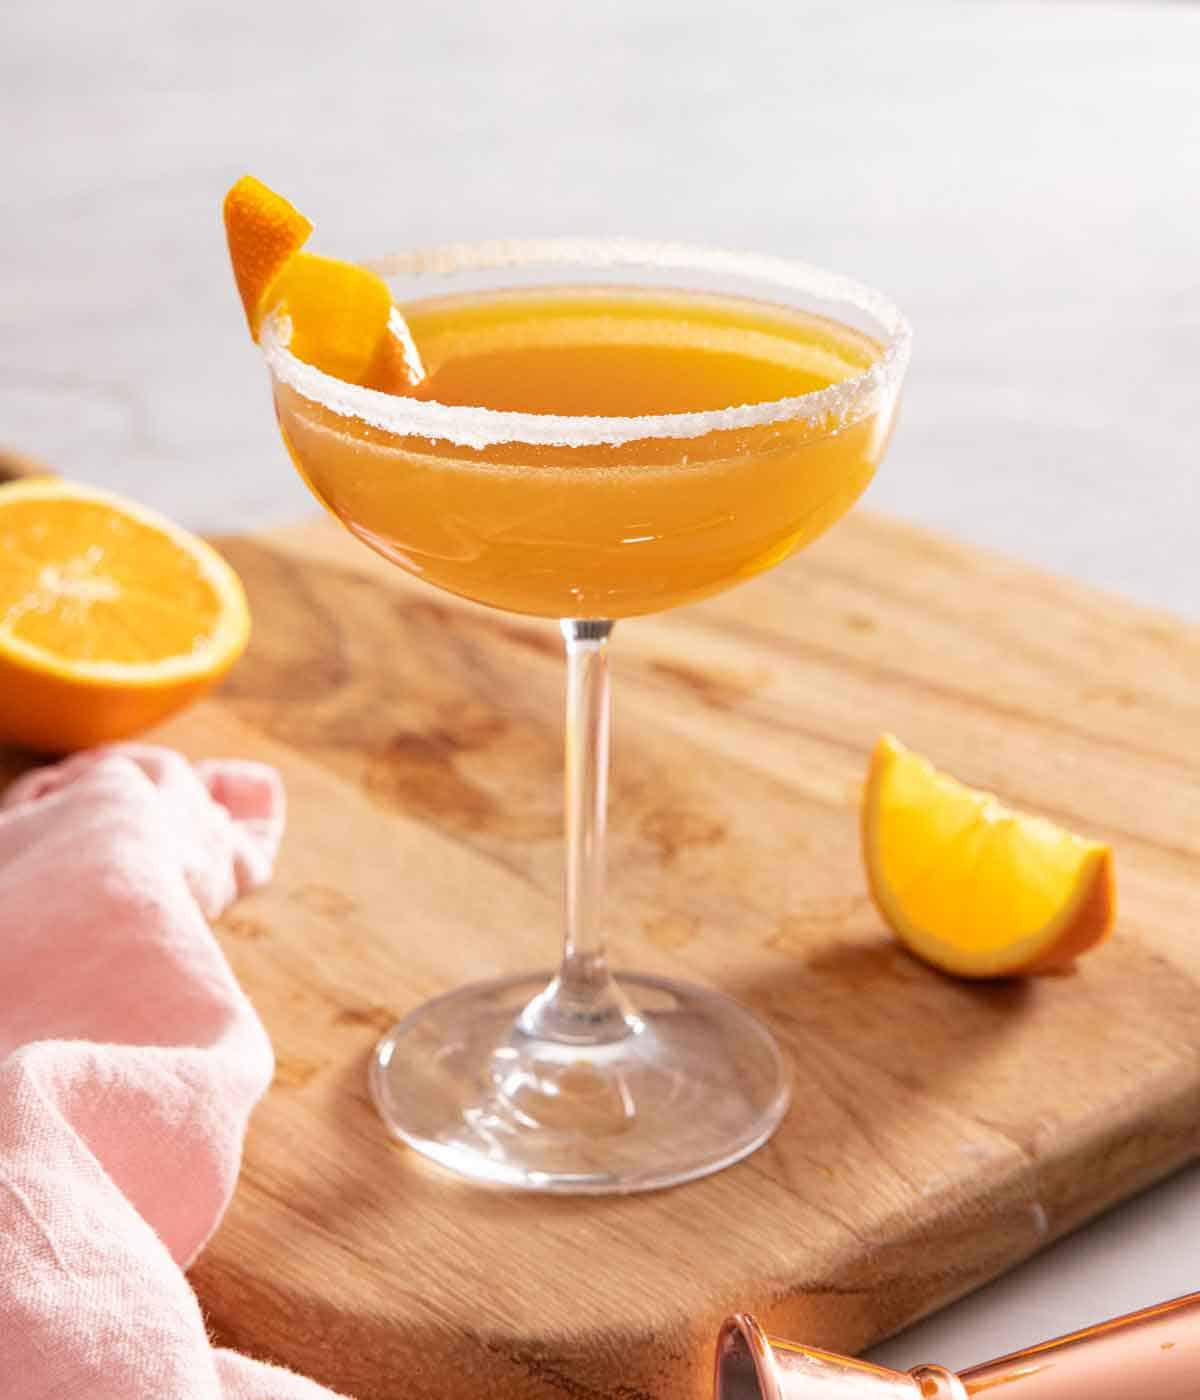 A sidecar cocktail with an orange peel garnish and sugar rim.